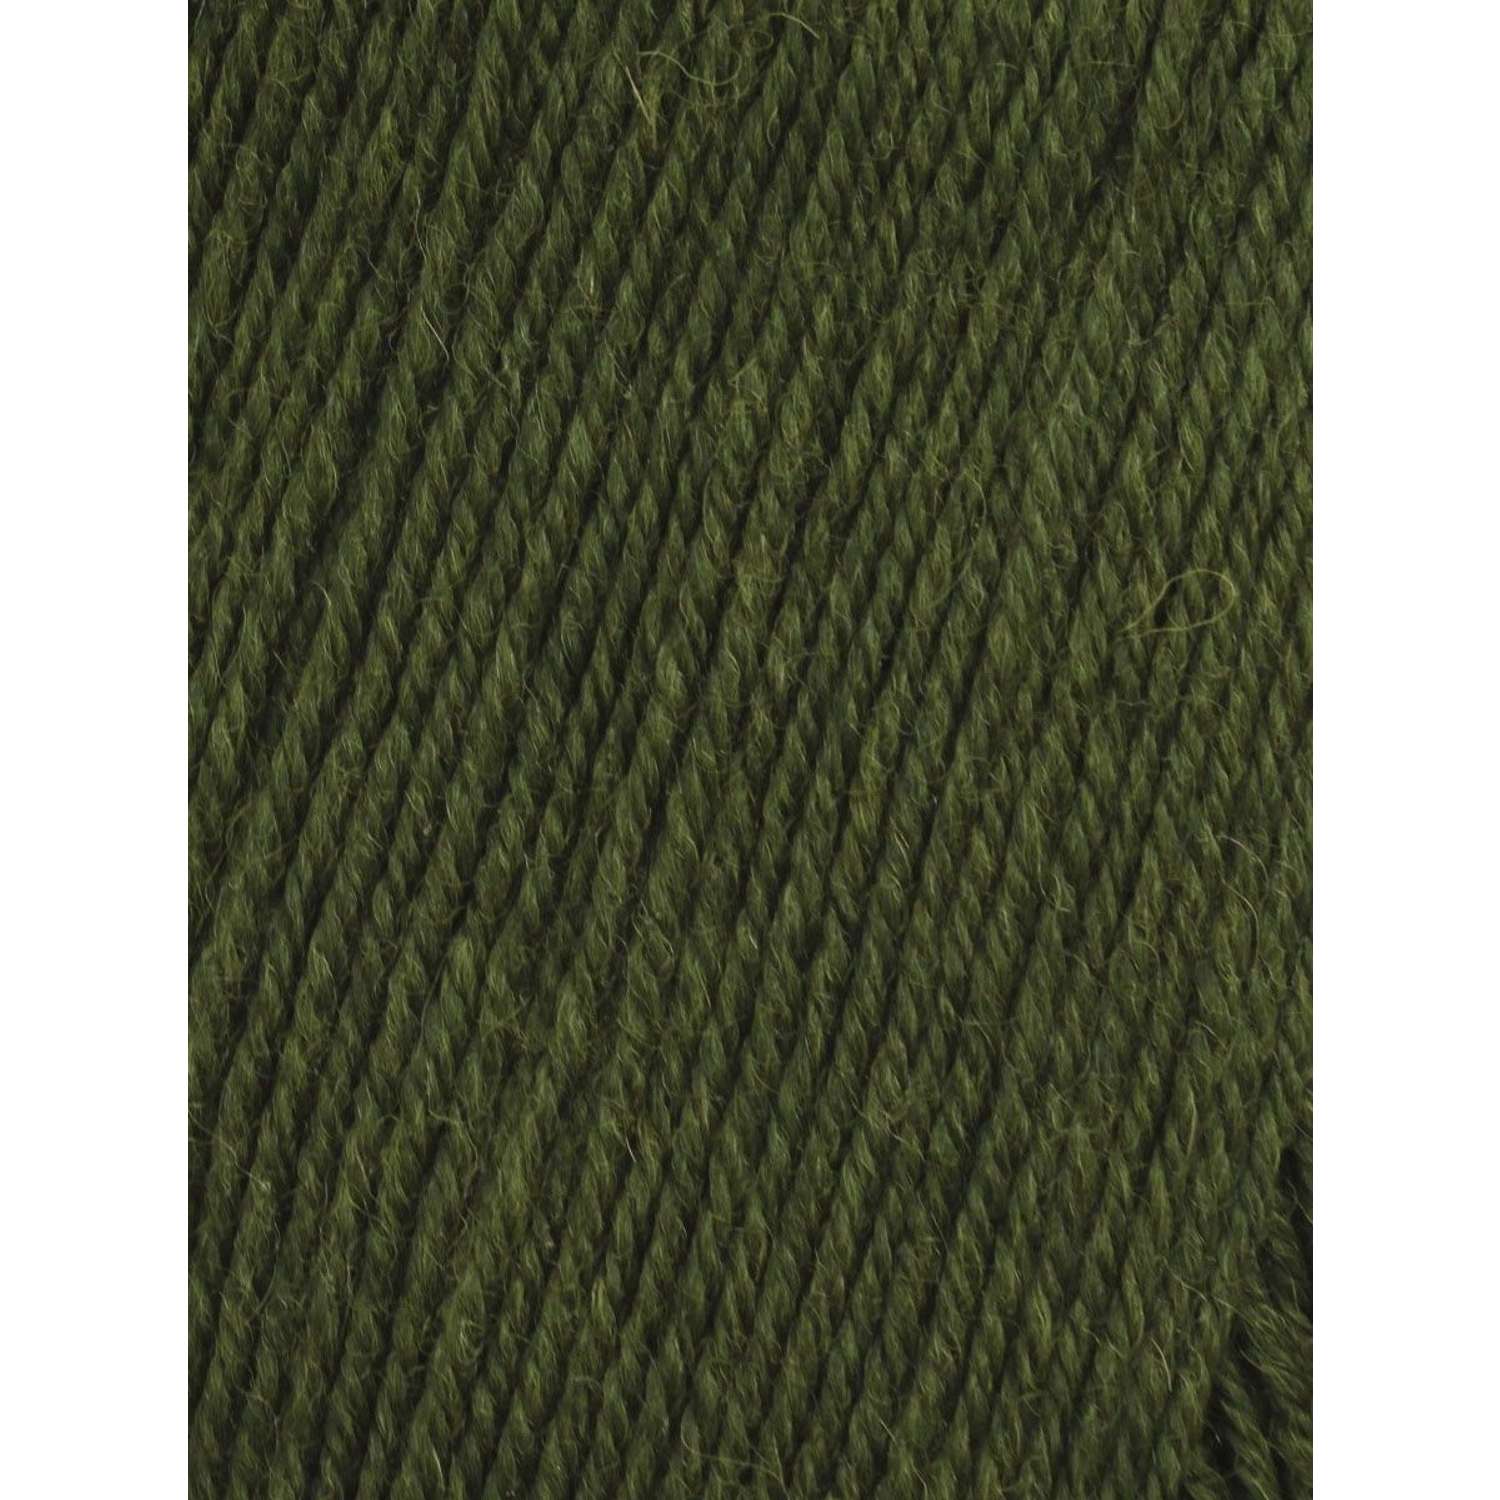 Пряжа Astra Premium Афродита полушерстяная 100 г 250 м 01 14 зеленый 3 мотка - фото 3